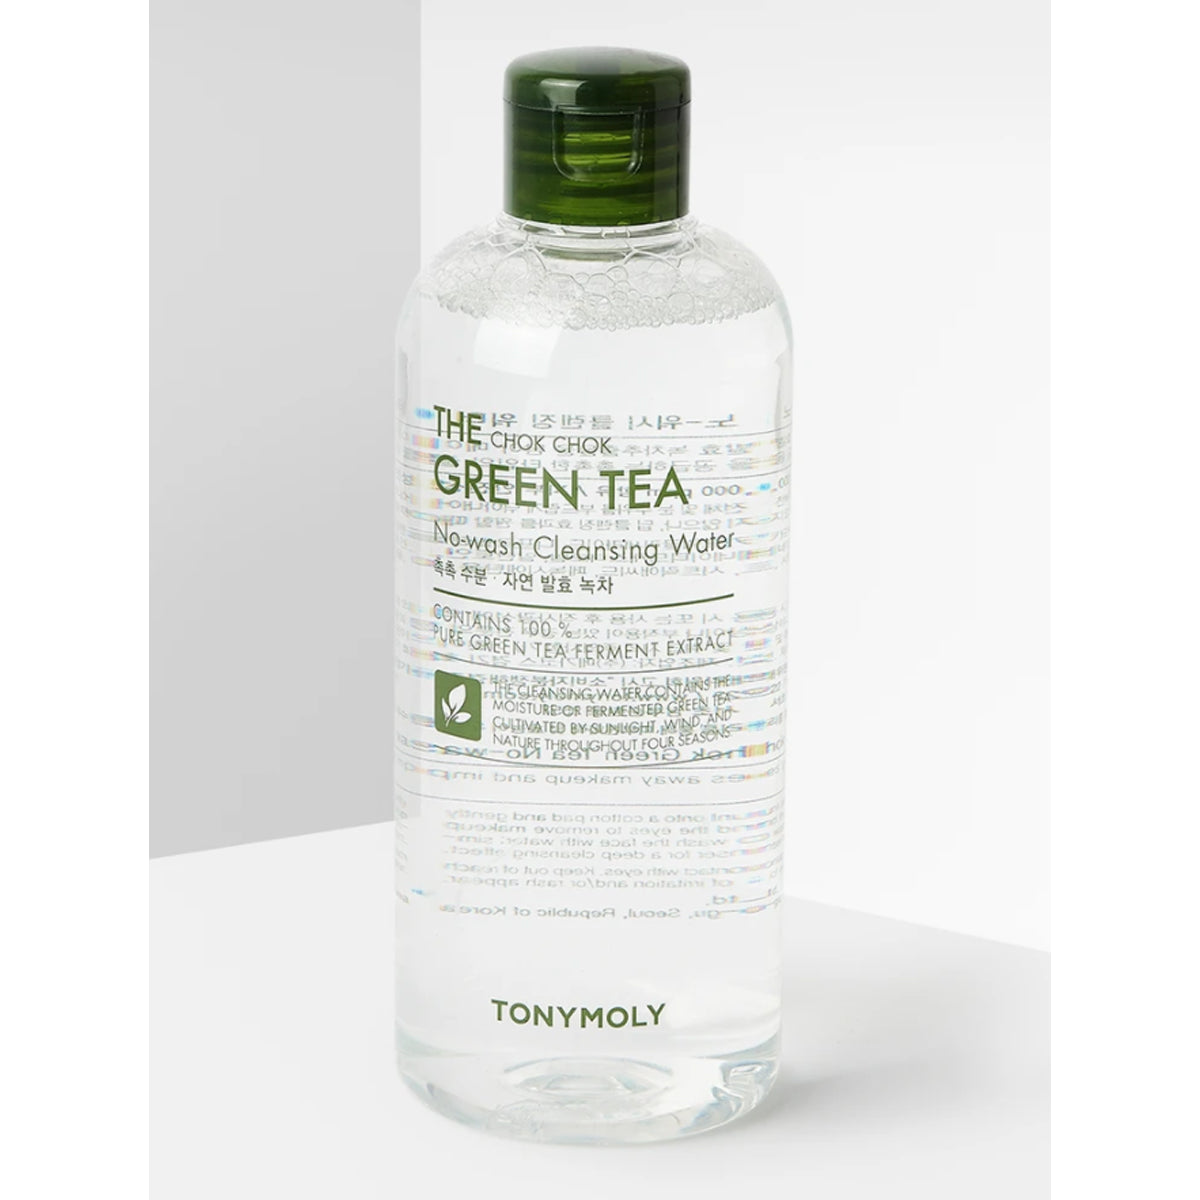 Tonymoly - The Chok Chok Green Tea Cleansing Water - 500 ml